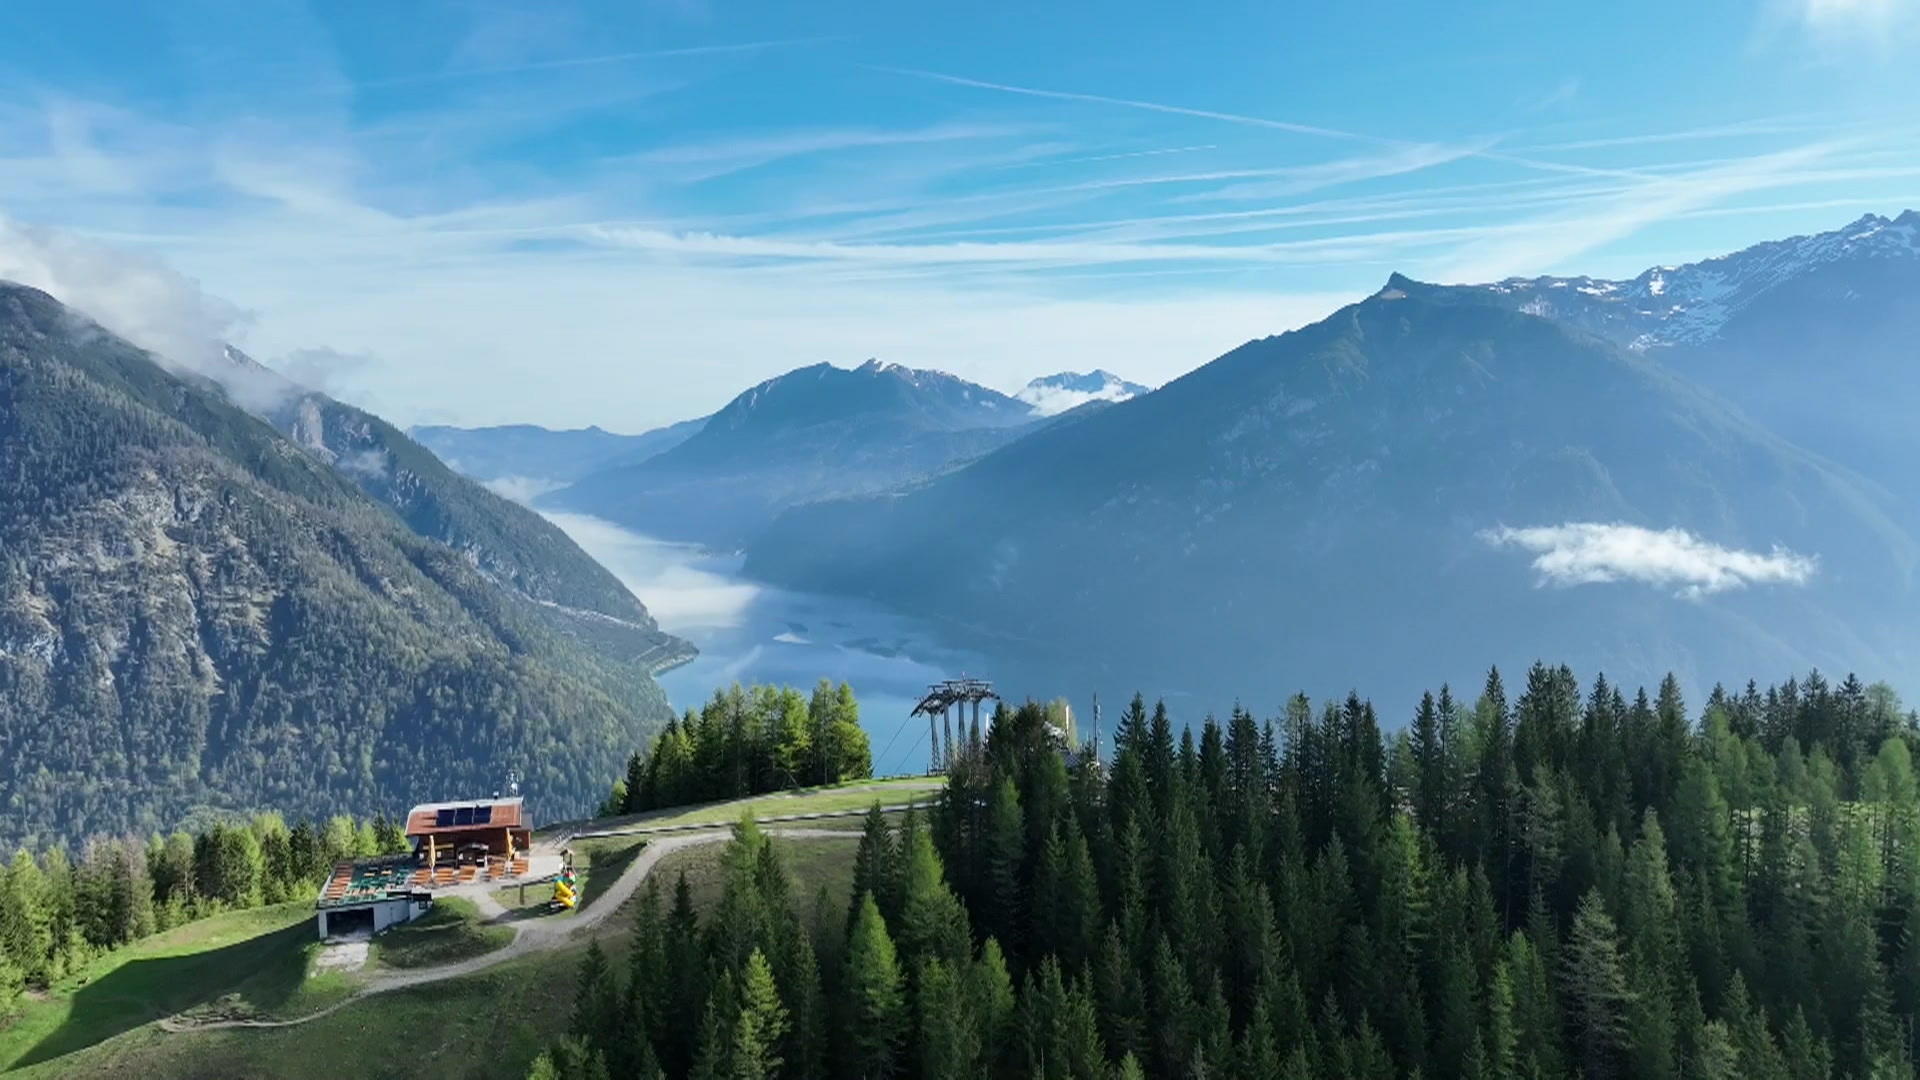 Flug über das Tiroler Meer unter blauem Himmel.  Sommerfeeling am Achensee